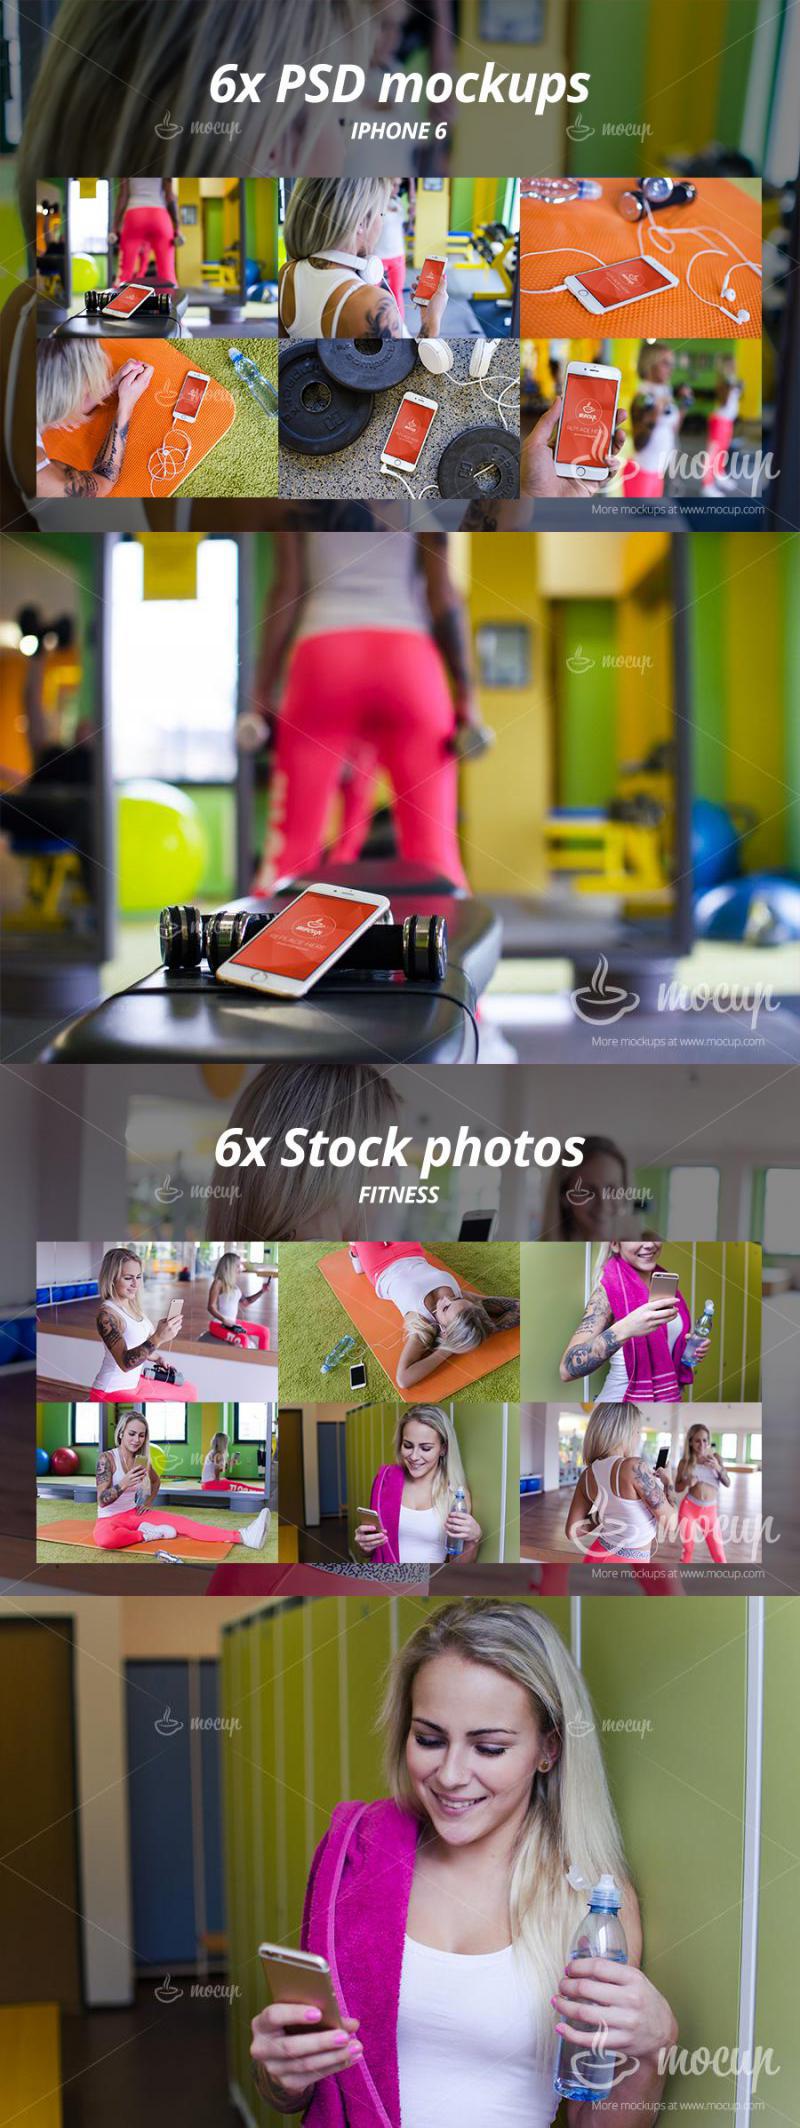 6 Mockups & 6 Photos iPhone Fitness